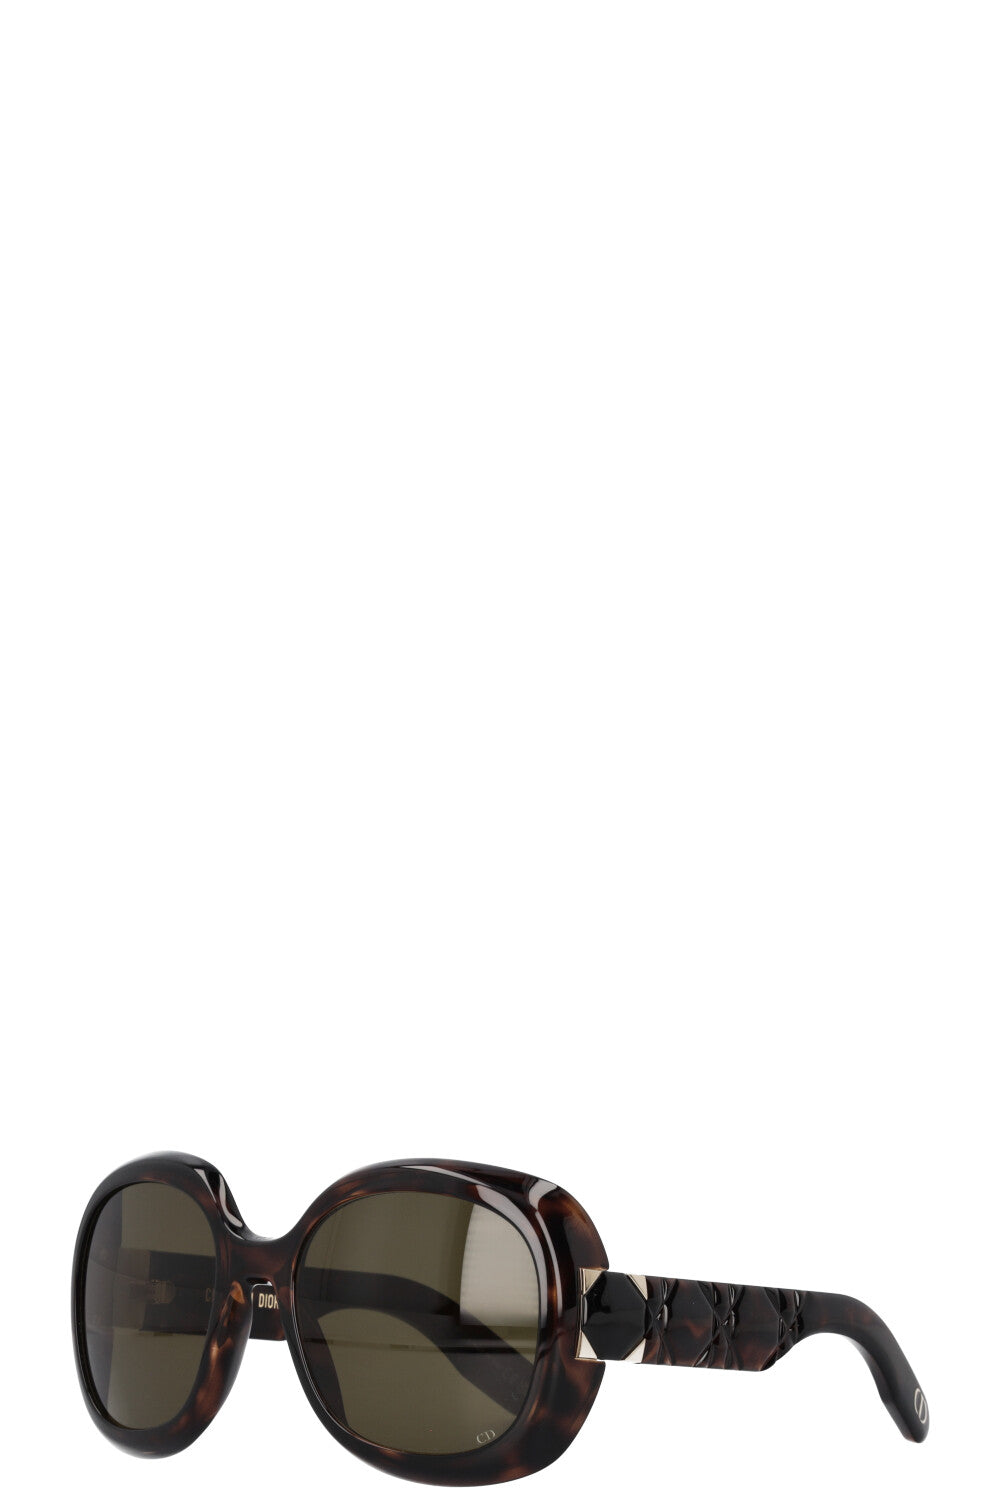 CHRISTIAN DIOR Lady Sunglasses 95.22.R21 Tortoise